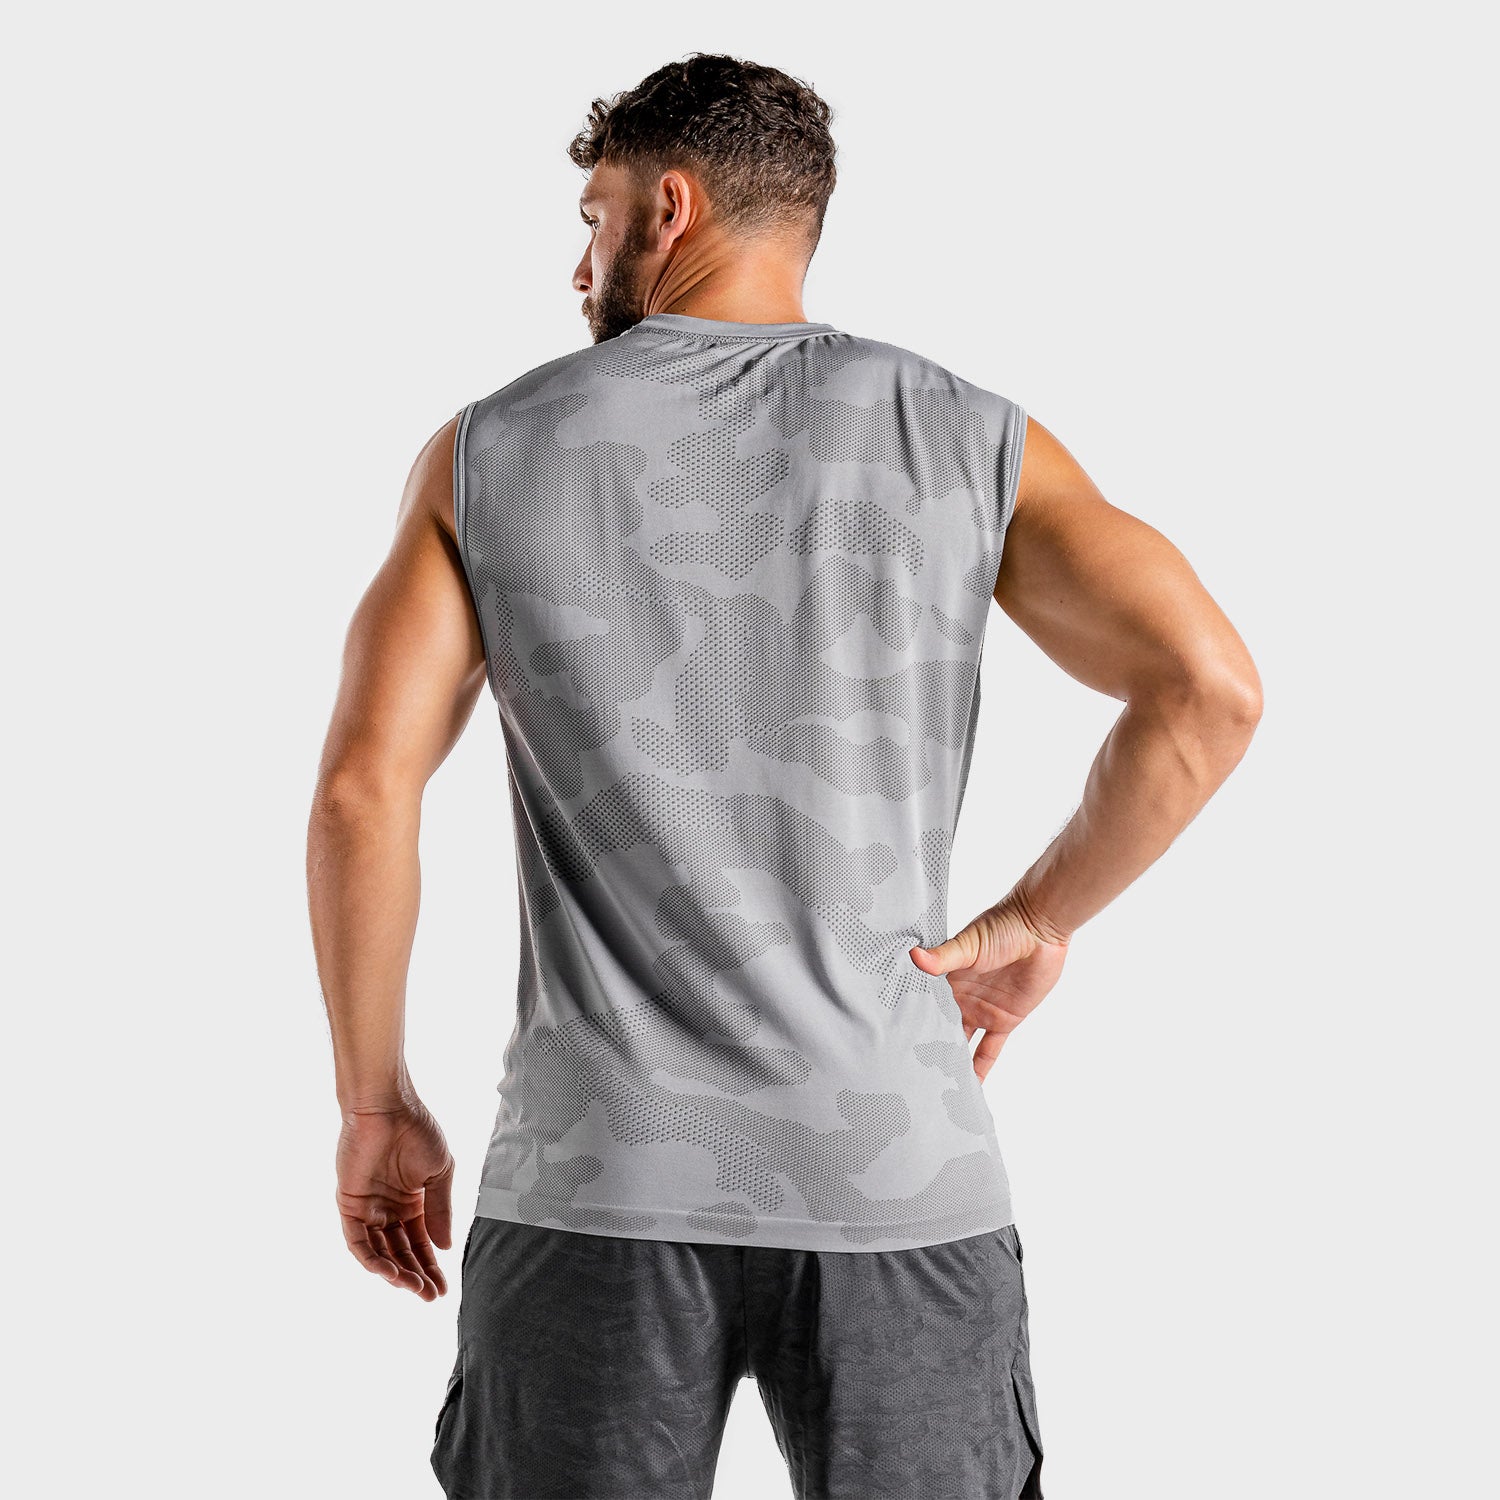 squatwolf-gym-wear-wolf-seamless-tank-grey-workout-tank-tops-for-men